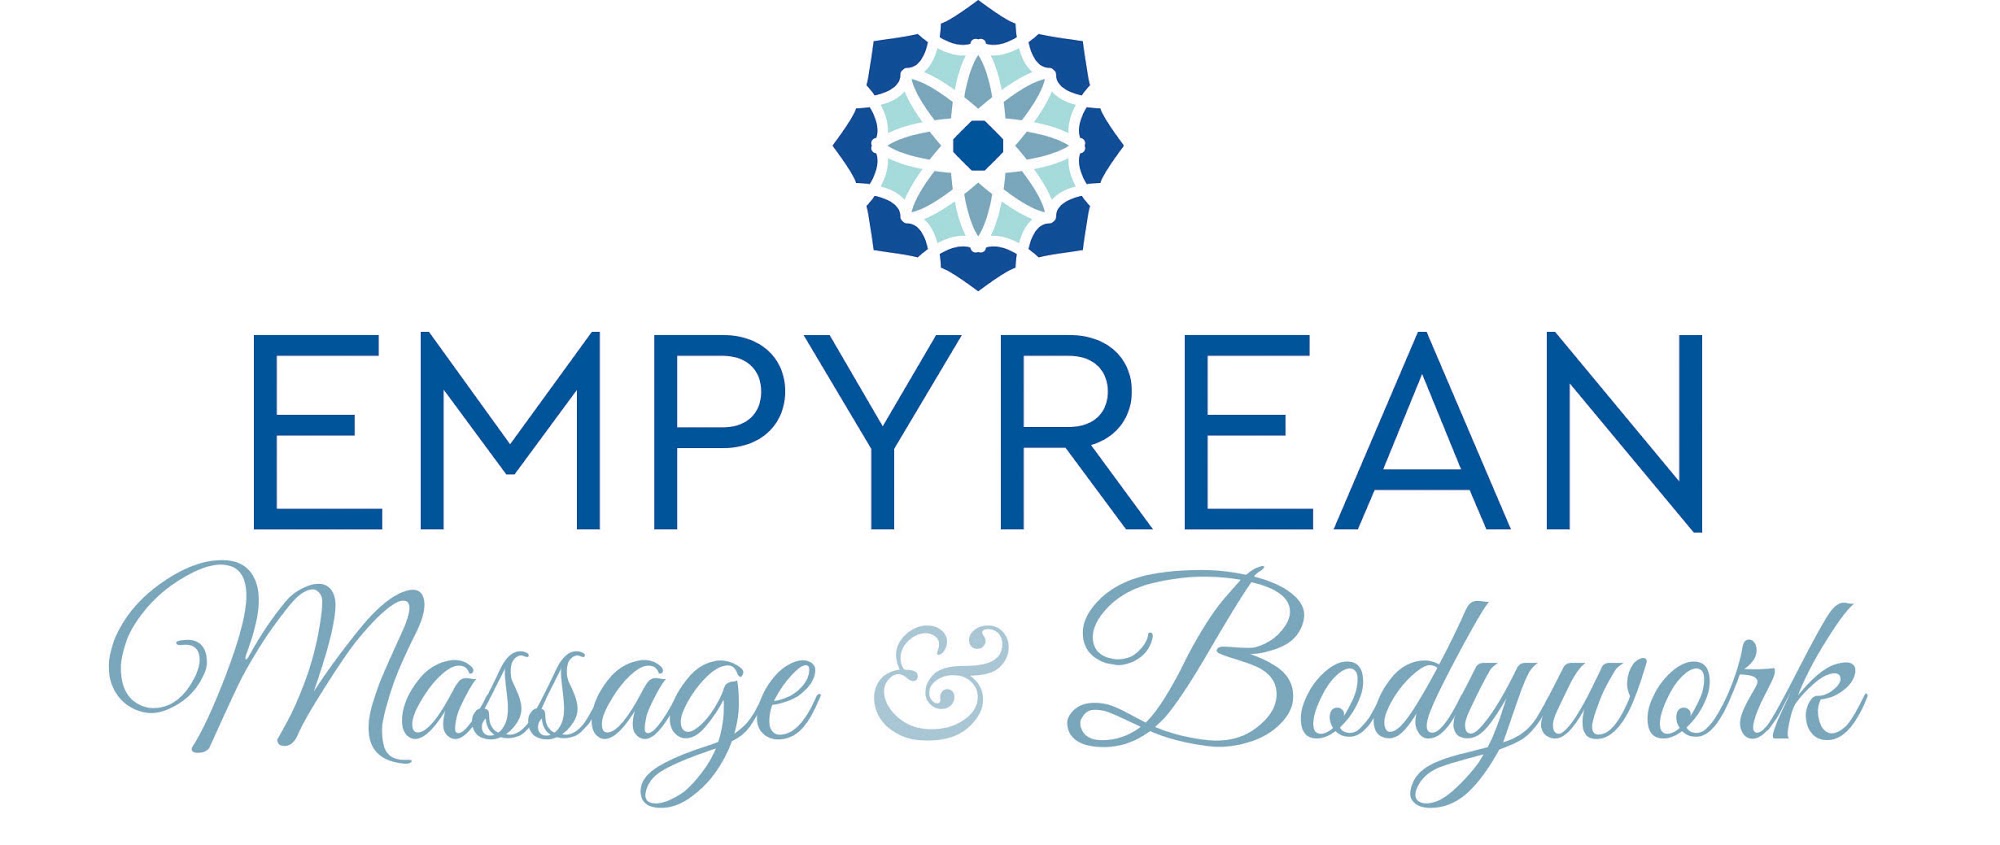 Empyrean Massage & Bodywork, LLC